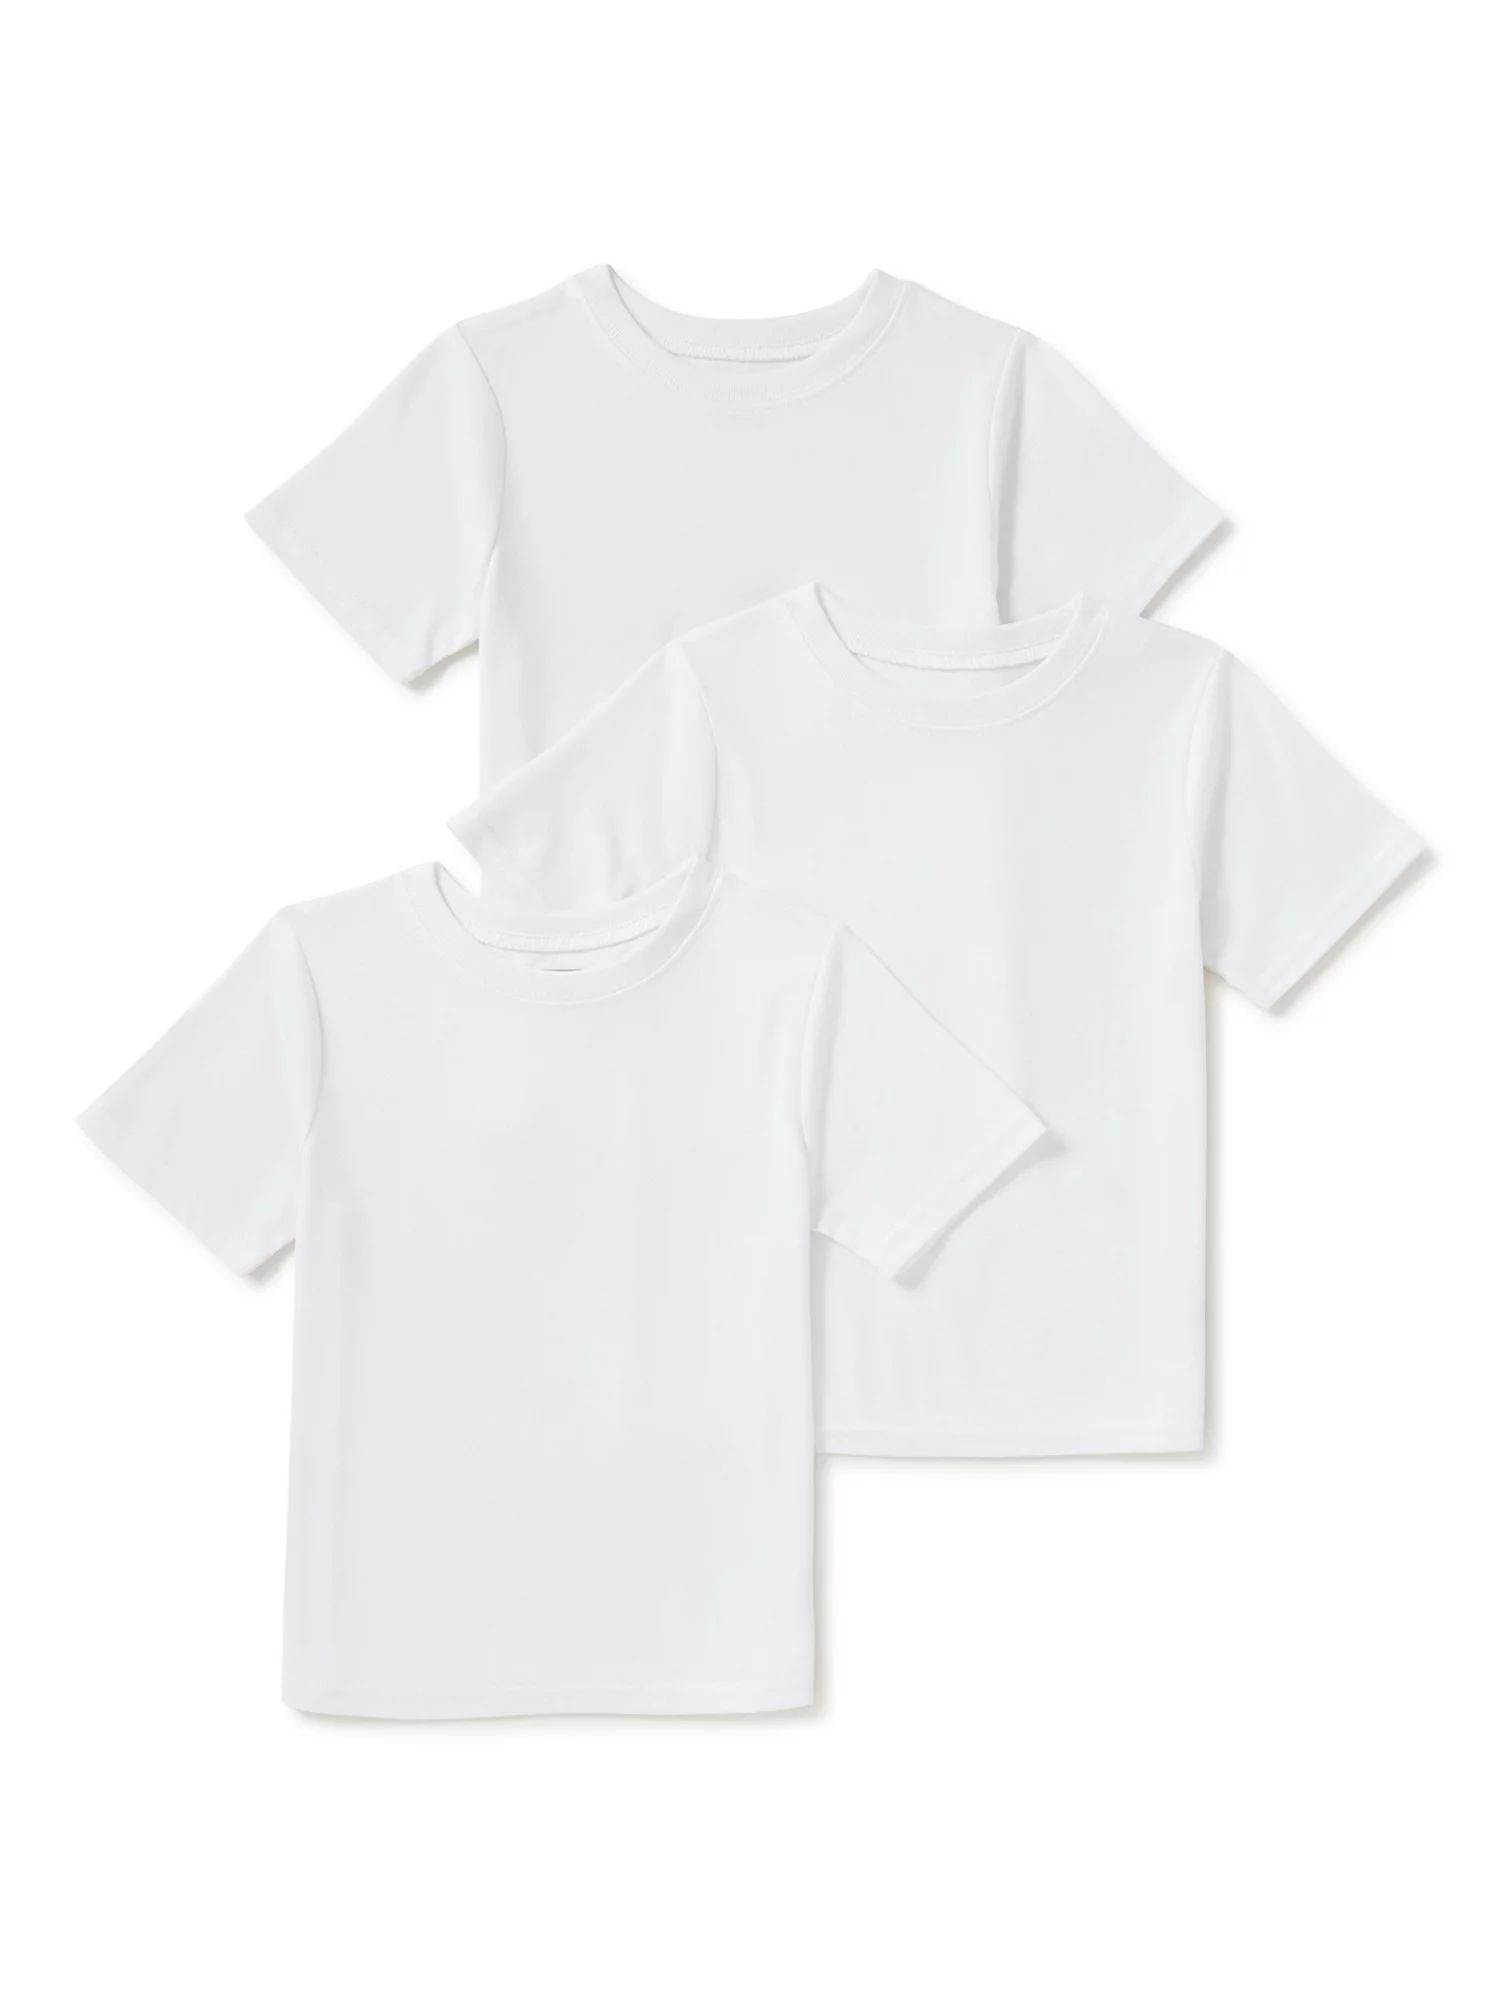 Garanimals Baby and Toddler Boy Basic T-Shirts Multipack, 3-Pack, Sizes 12M-5T | Walmart (US)